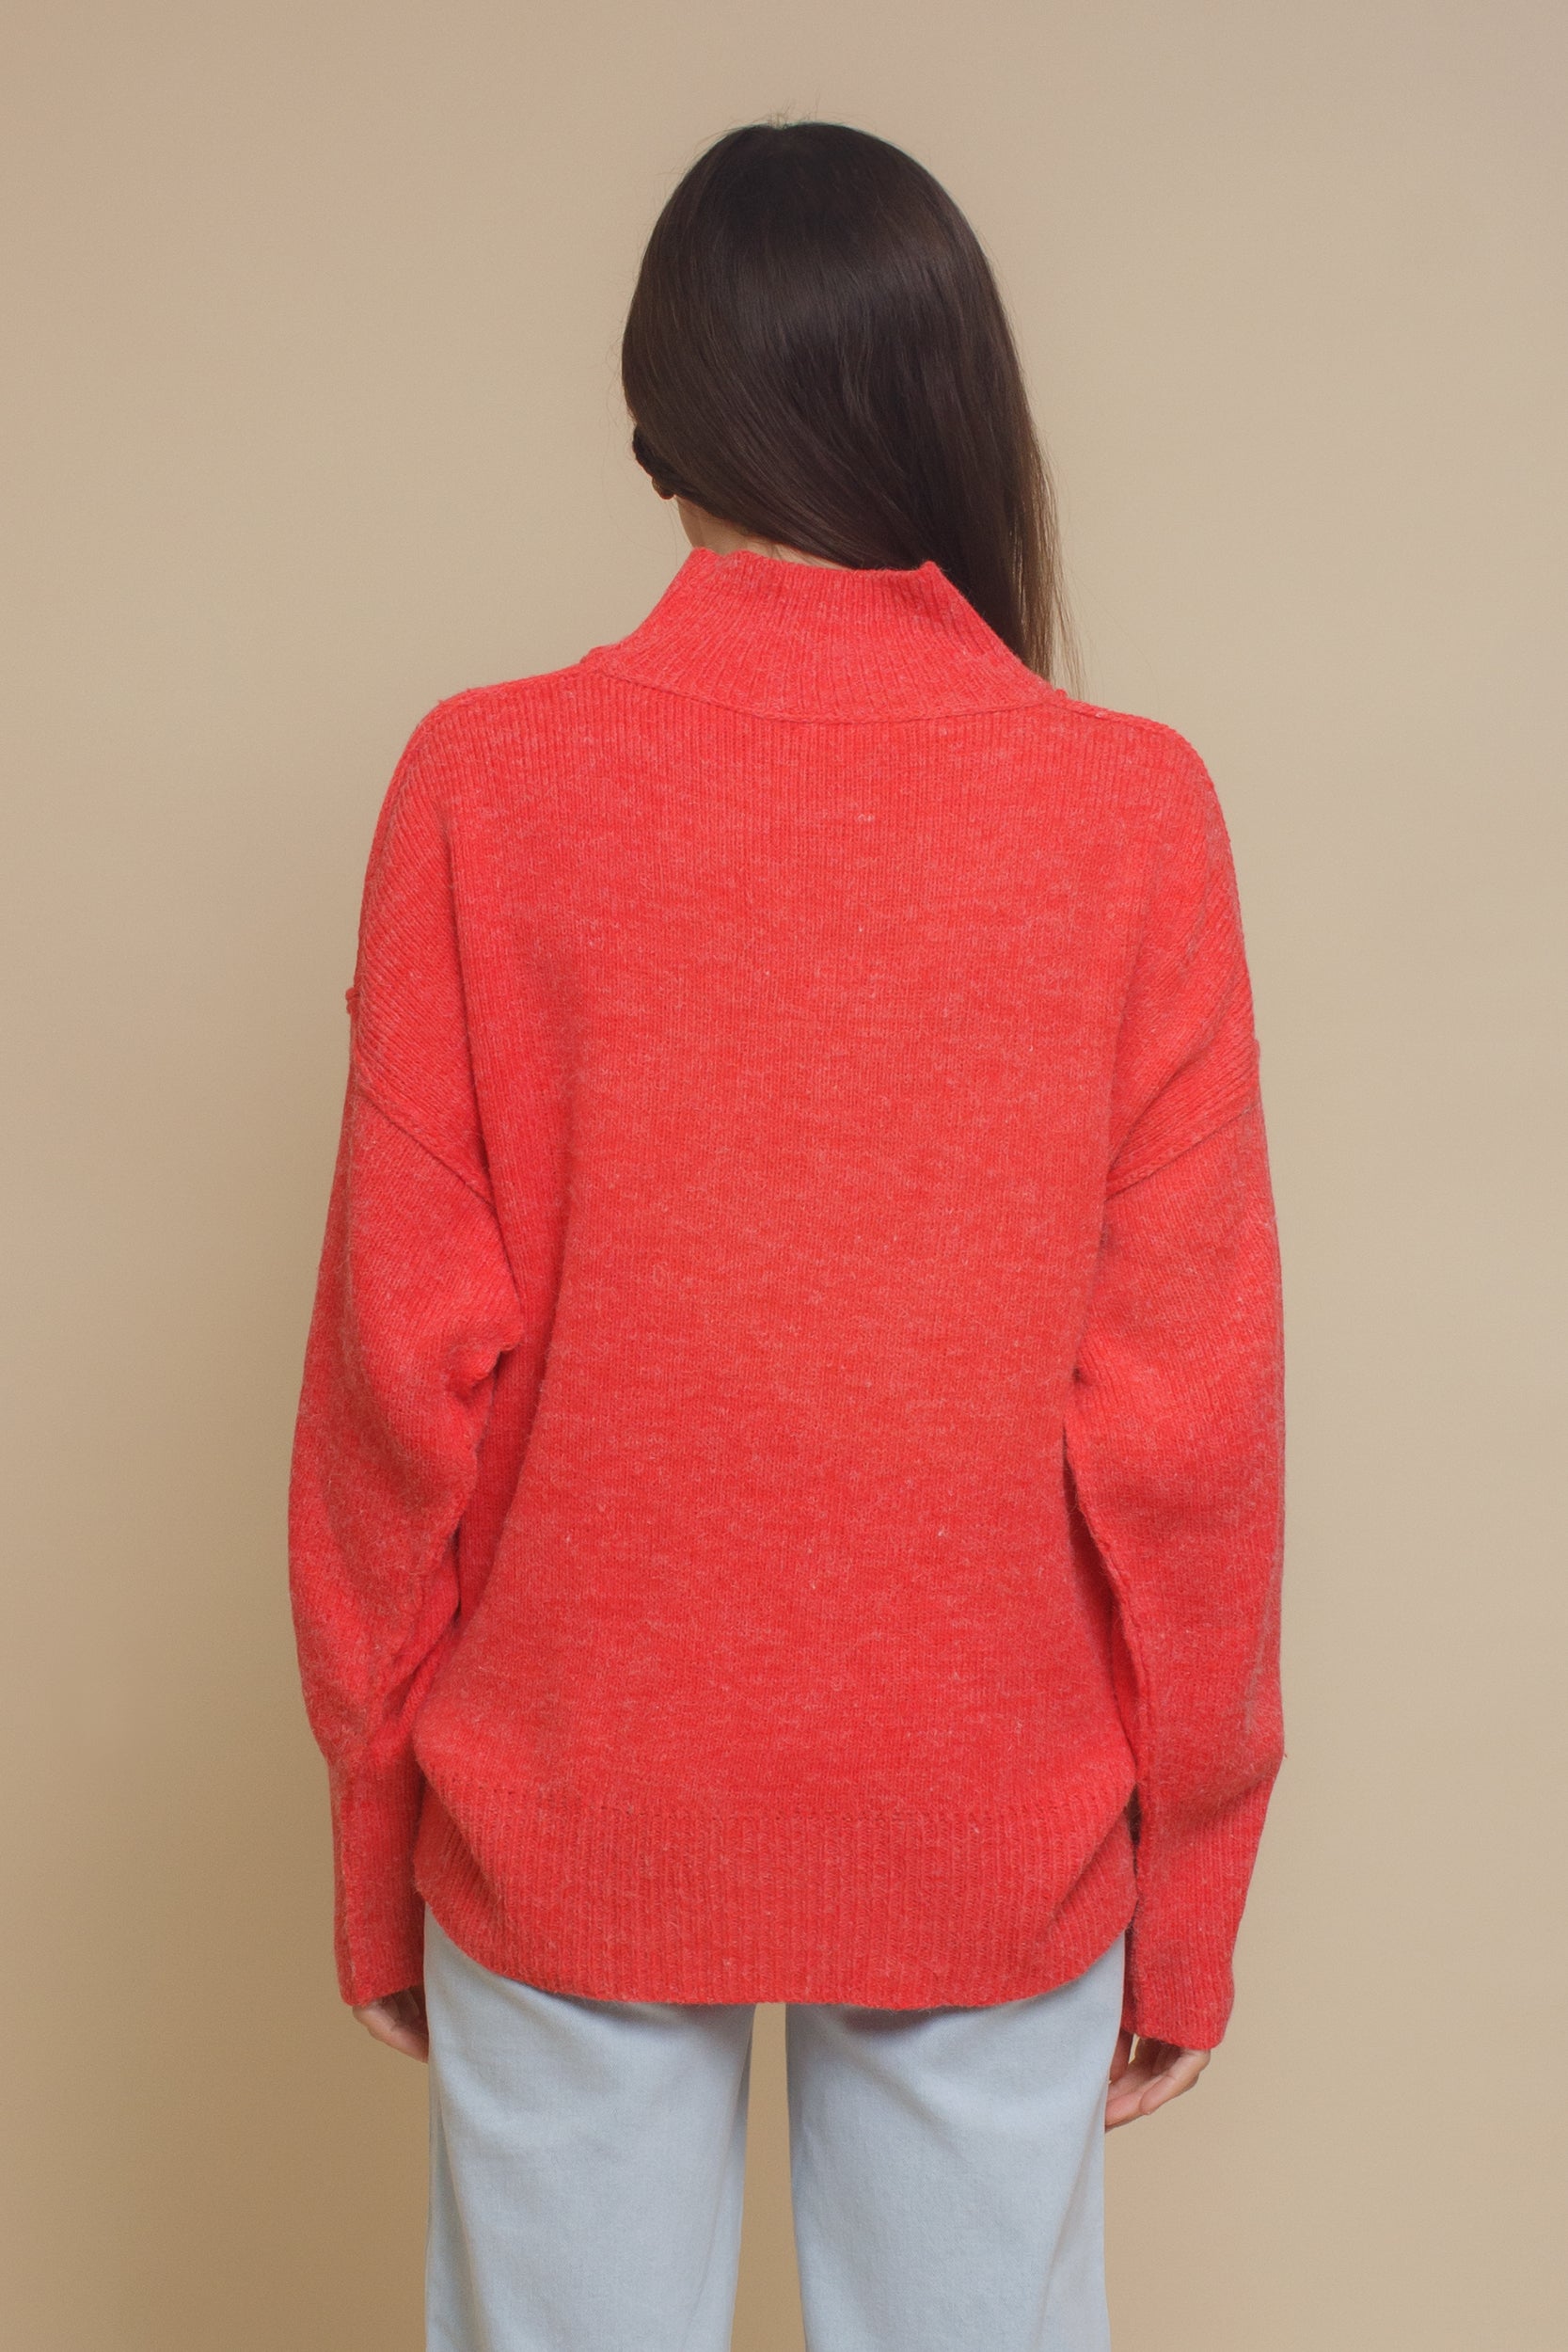 La Miel mock neck slouchy sweater, in tomato red.